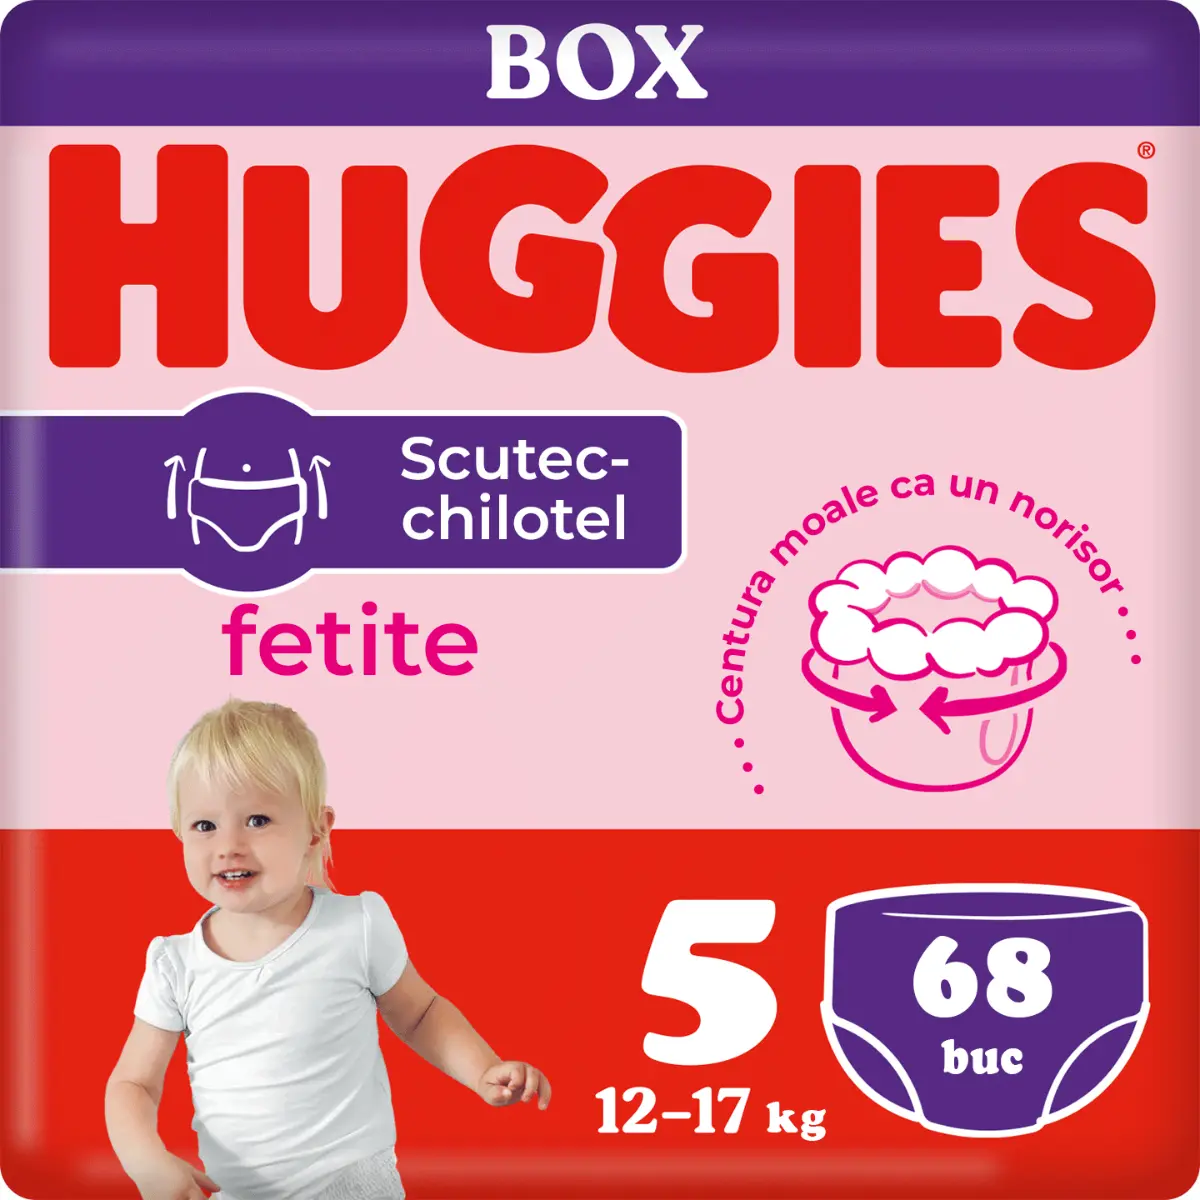 Scutece-chilotel Huggies Pants Fetite, Box (nr 5), 12-17kg, 68 buc